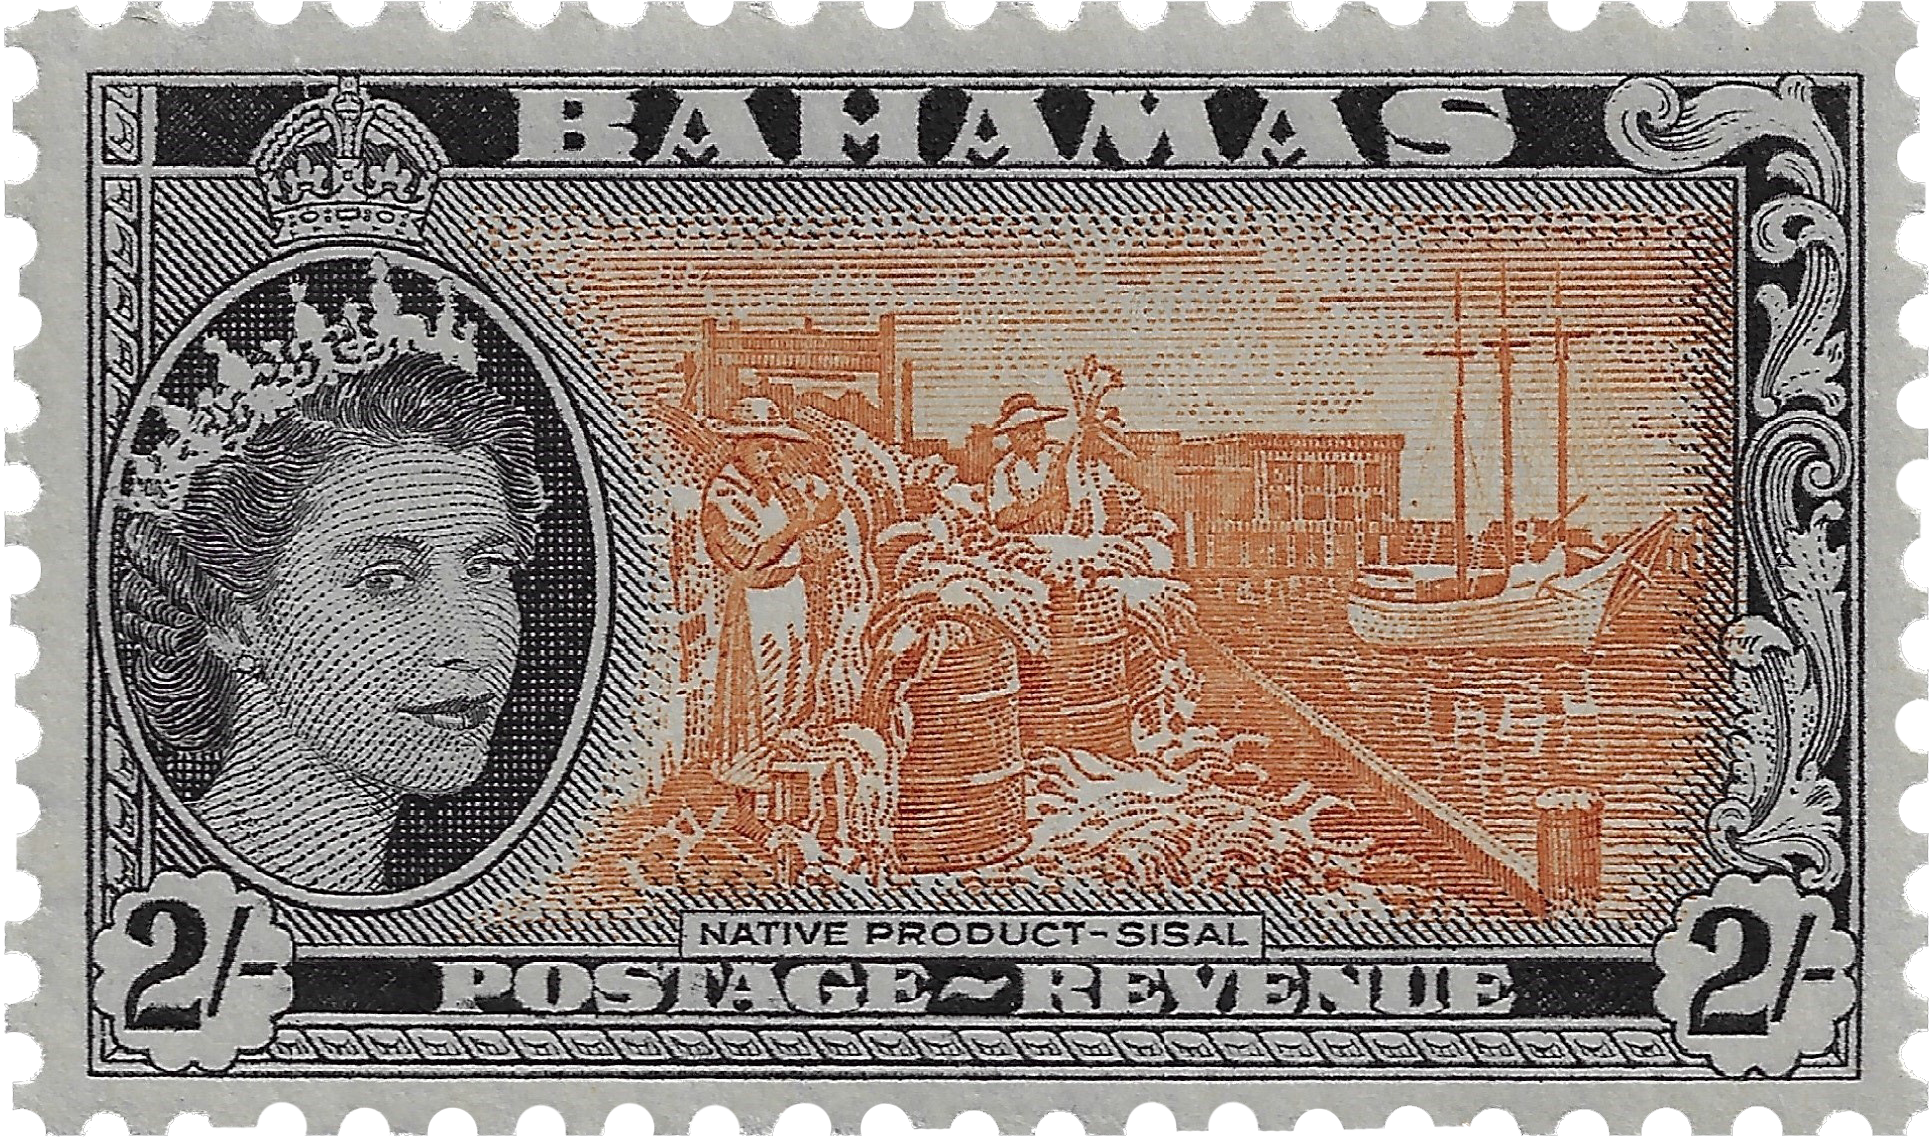 2s 1954, Native Product-Sisal